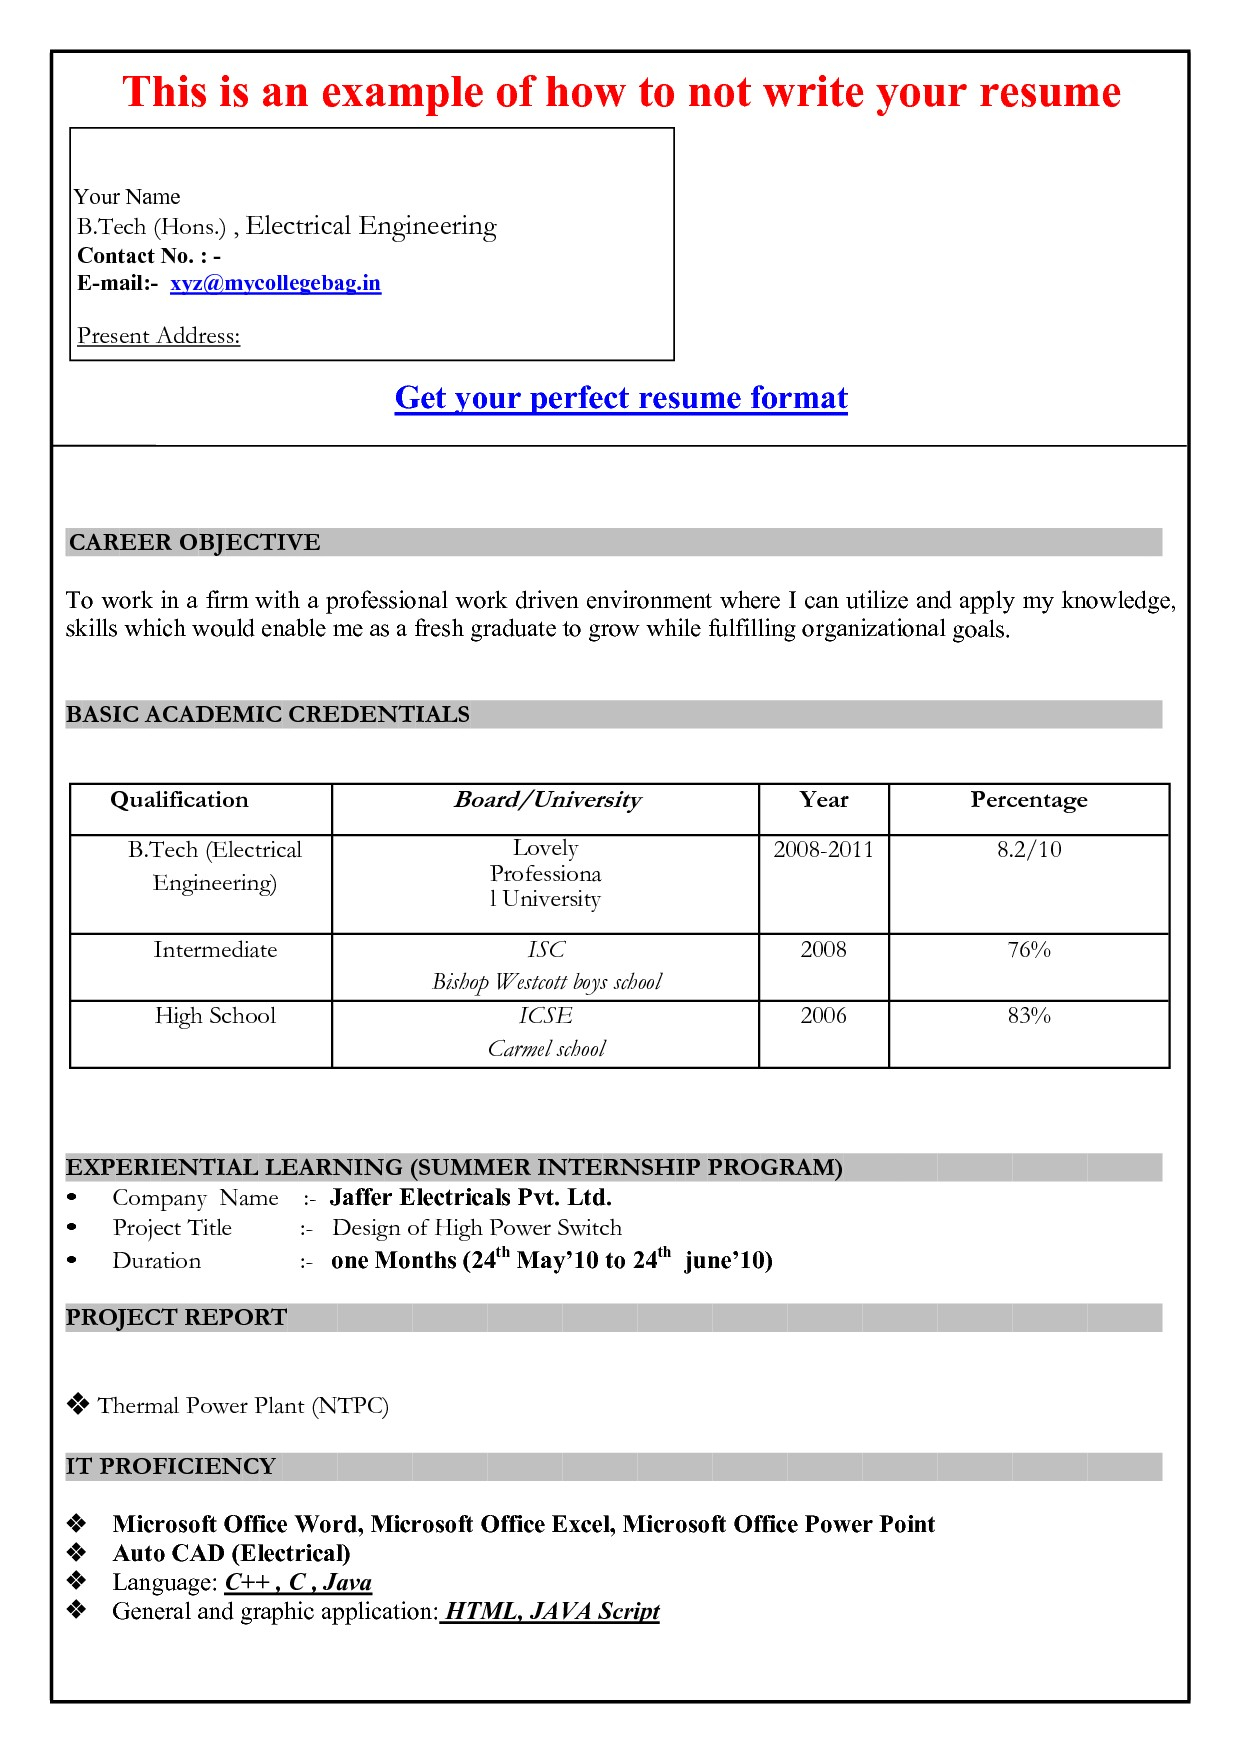 Resume Template Microsoft Word 2007 | Ckum.ca For Resume Templates Word 2007